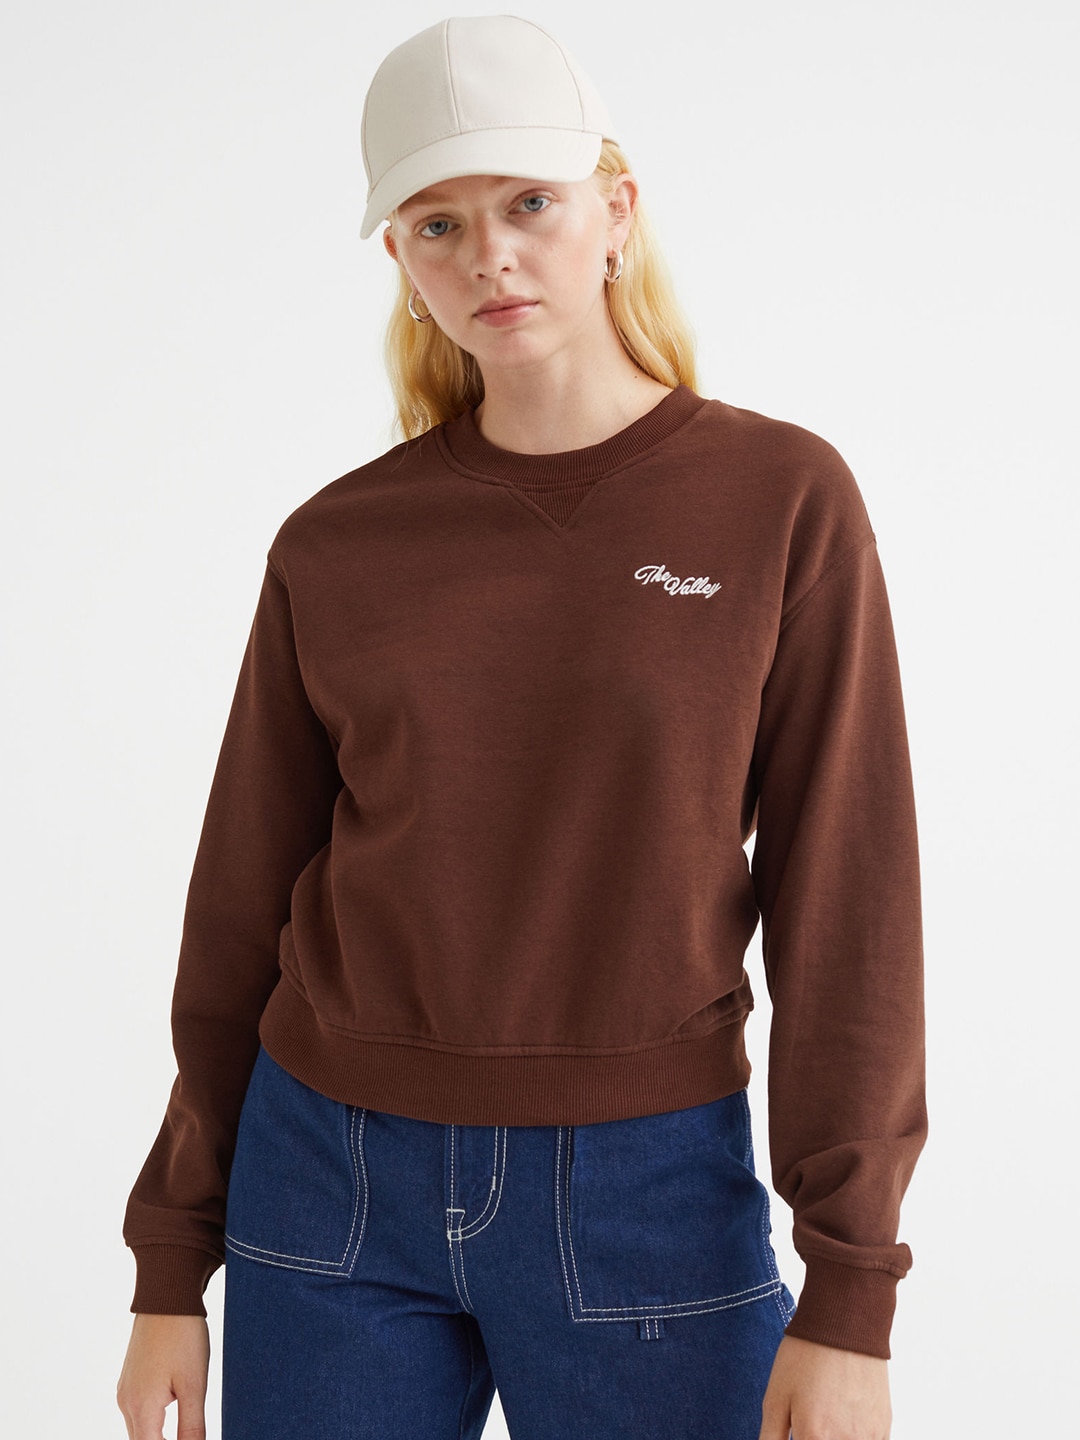 H&M Women Brown Printed Sweatshirt Price in India